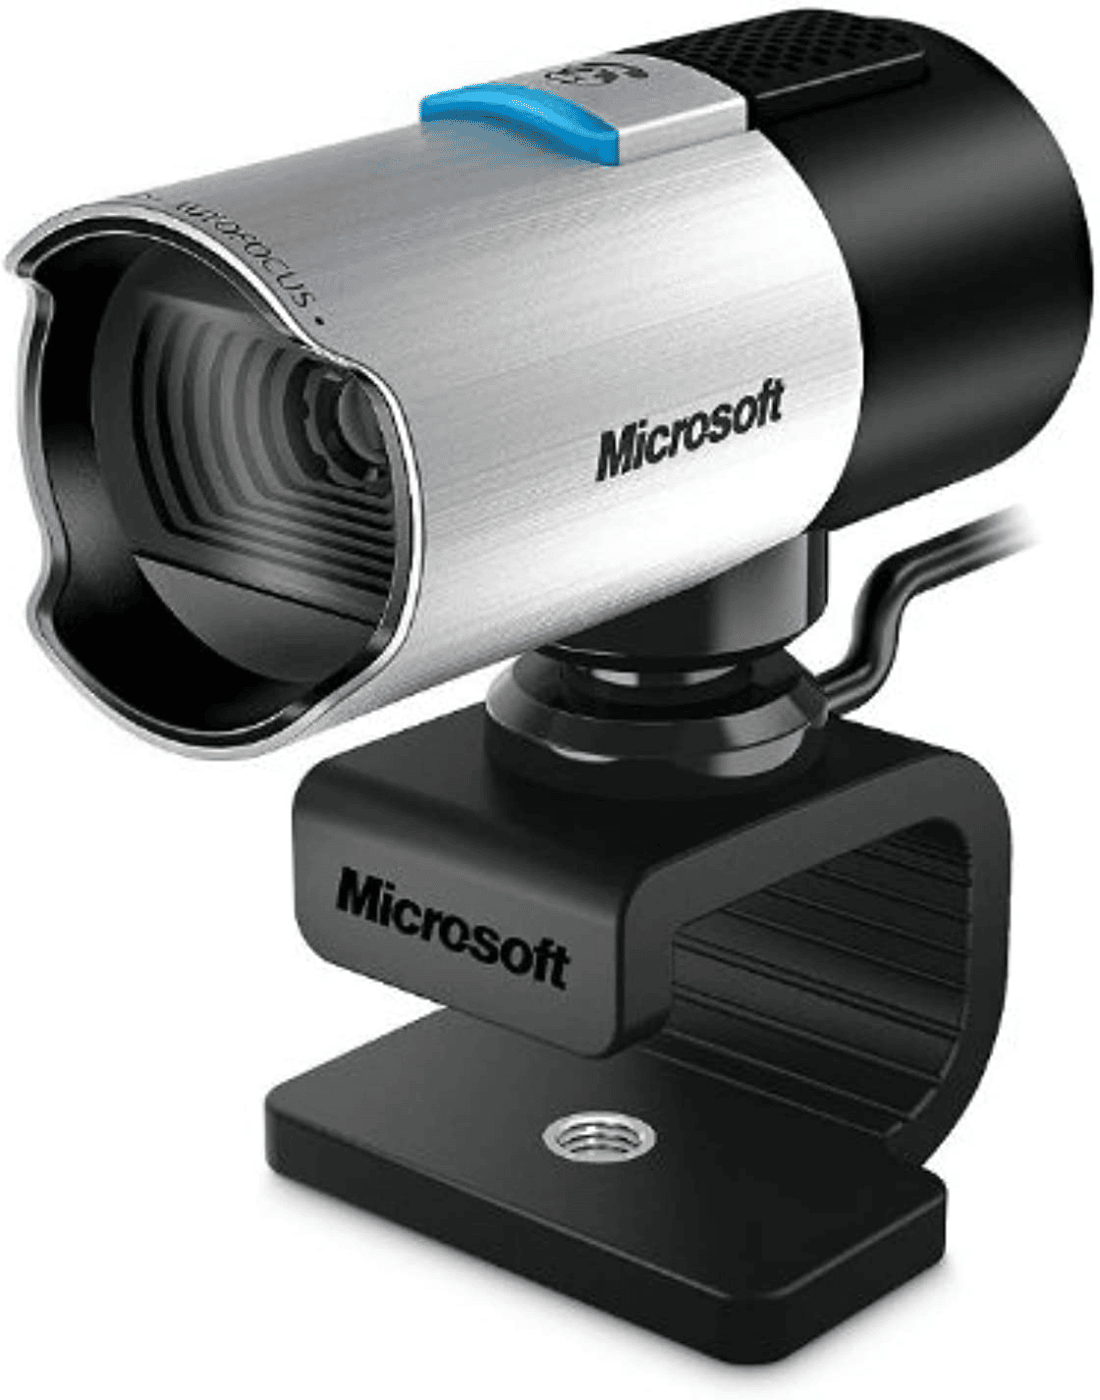 Microsoft webcam